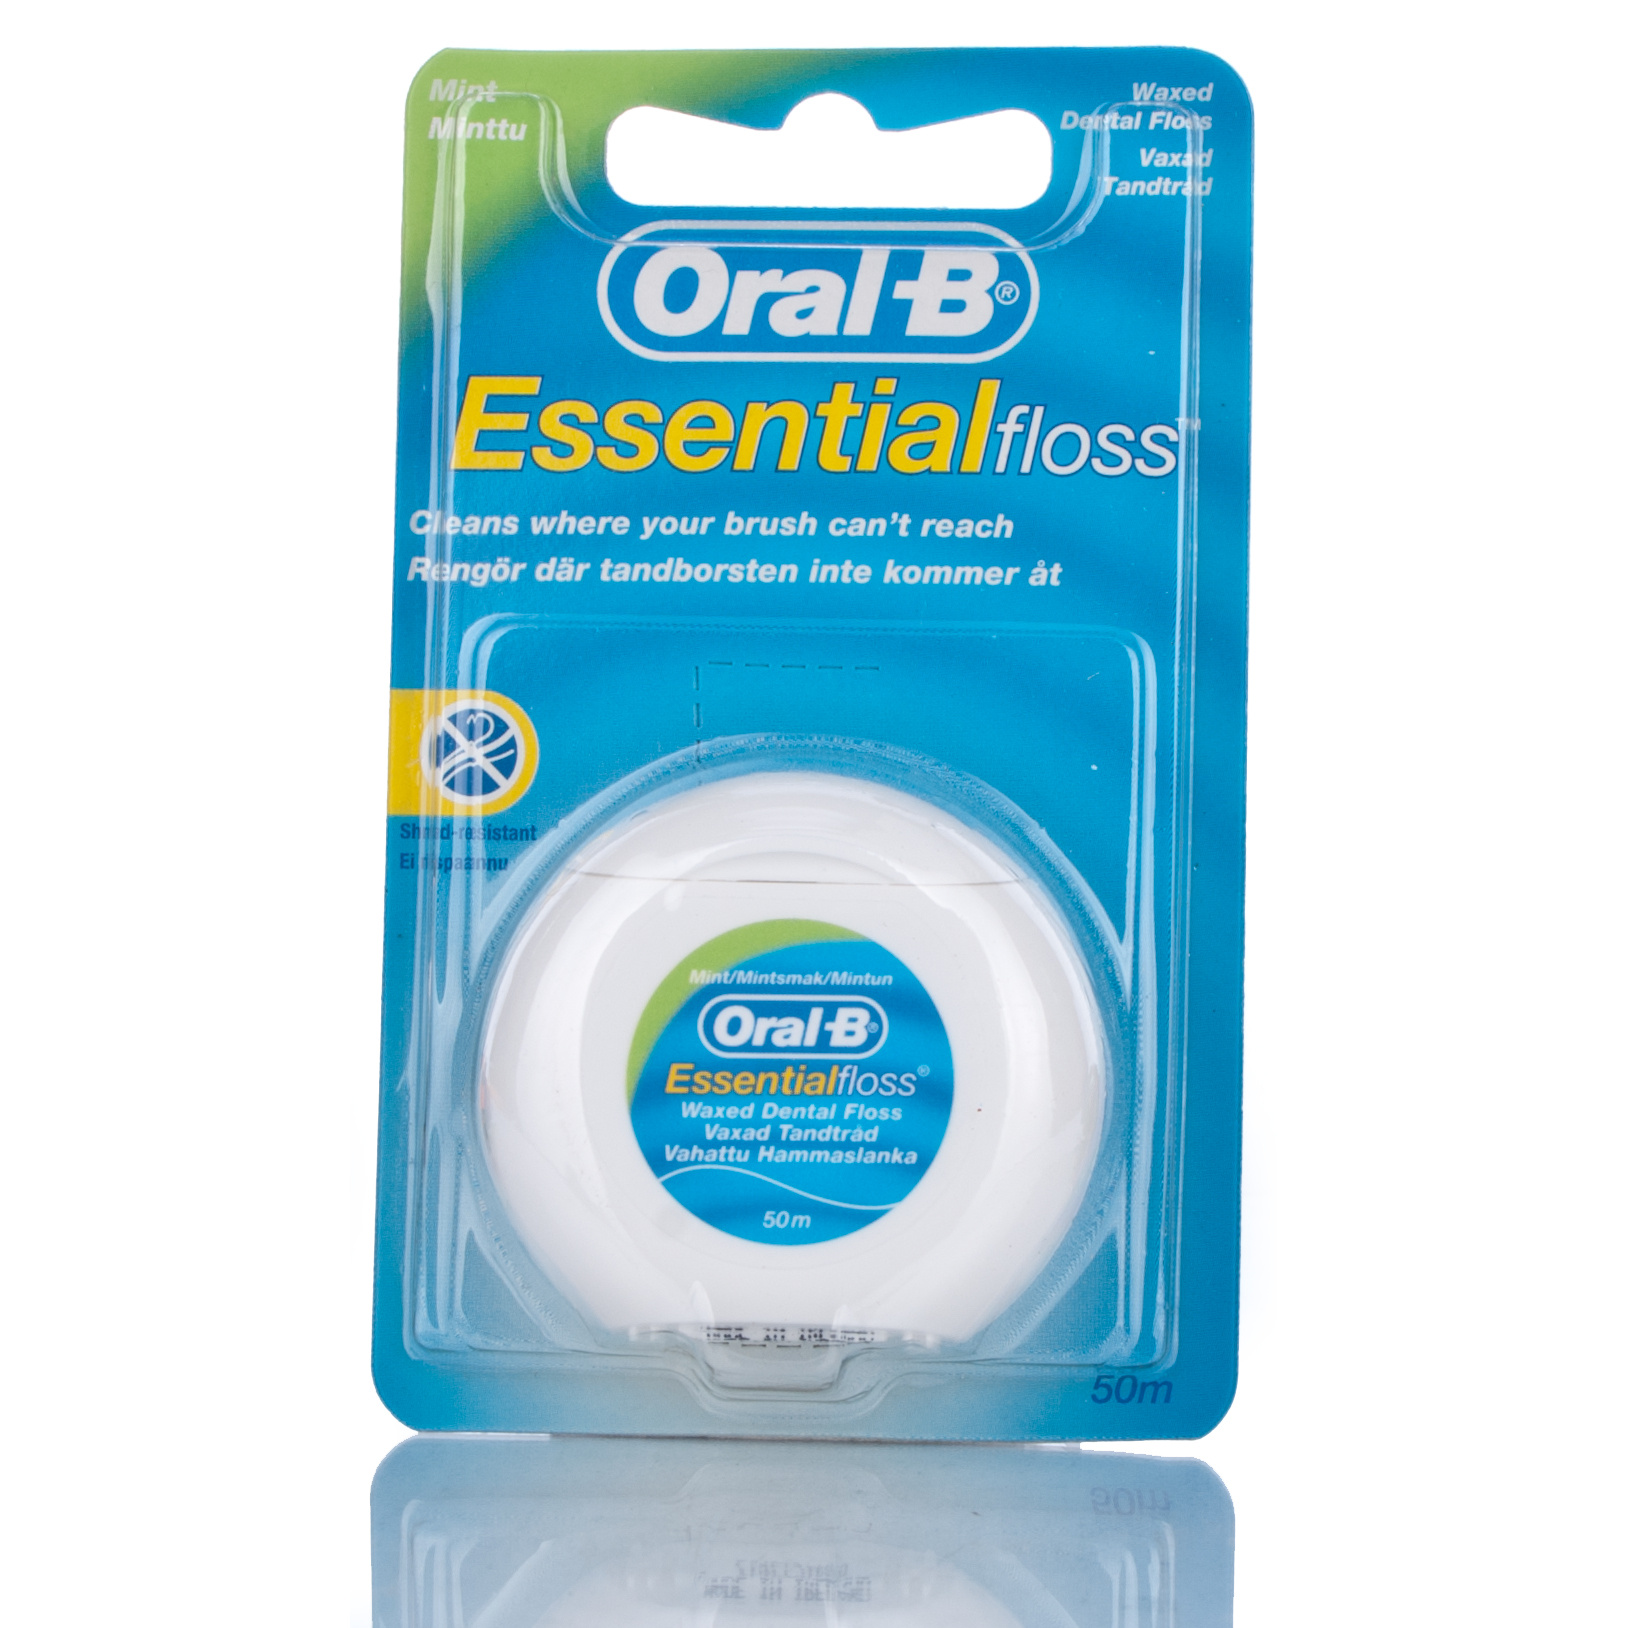 Oral-B Essential Waxed Dental Floss Triple Pack